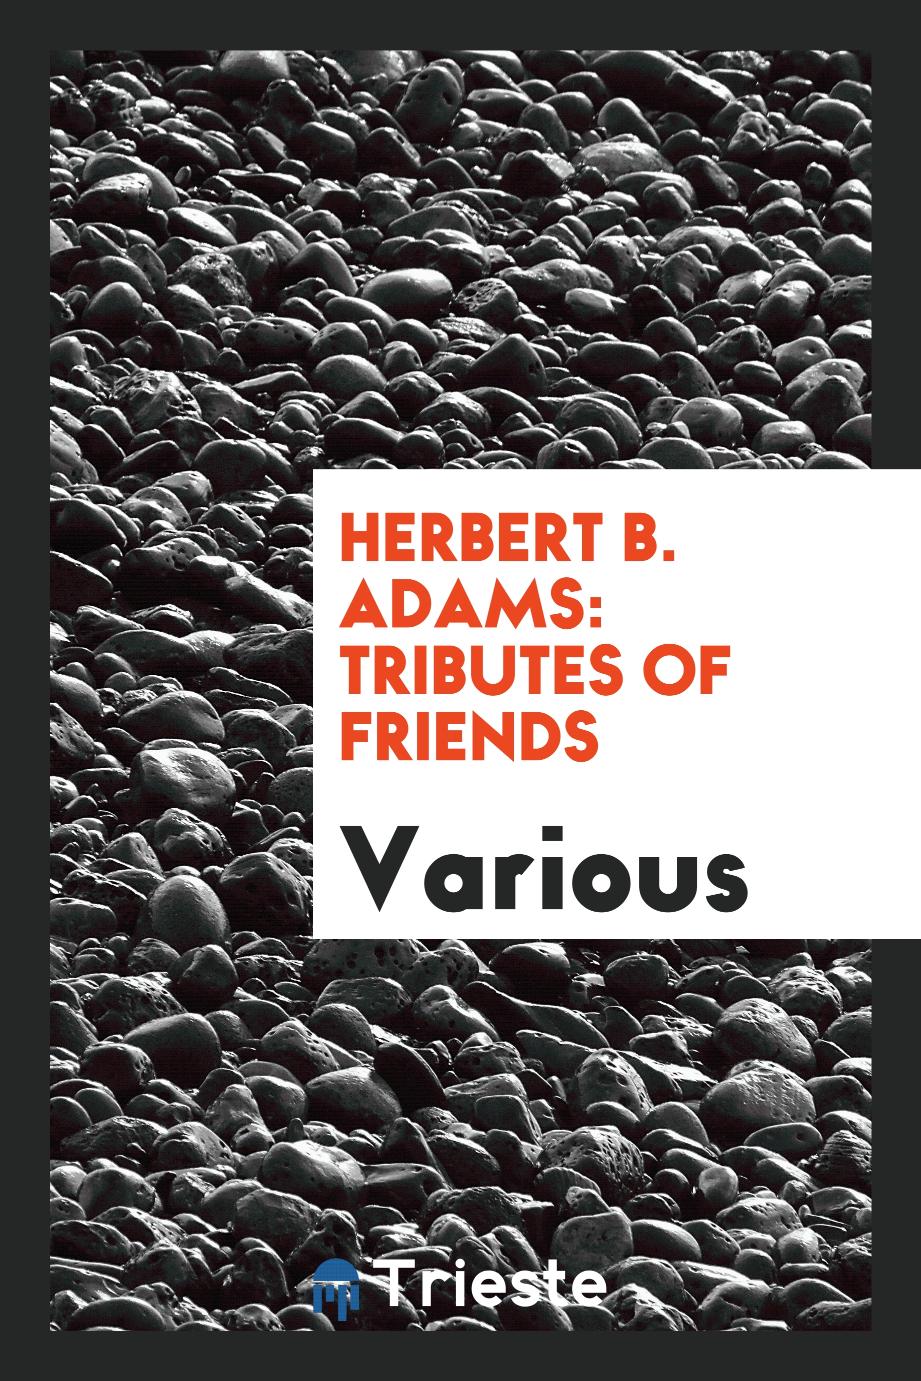 Herbert B. Adams: Tributes of Friends